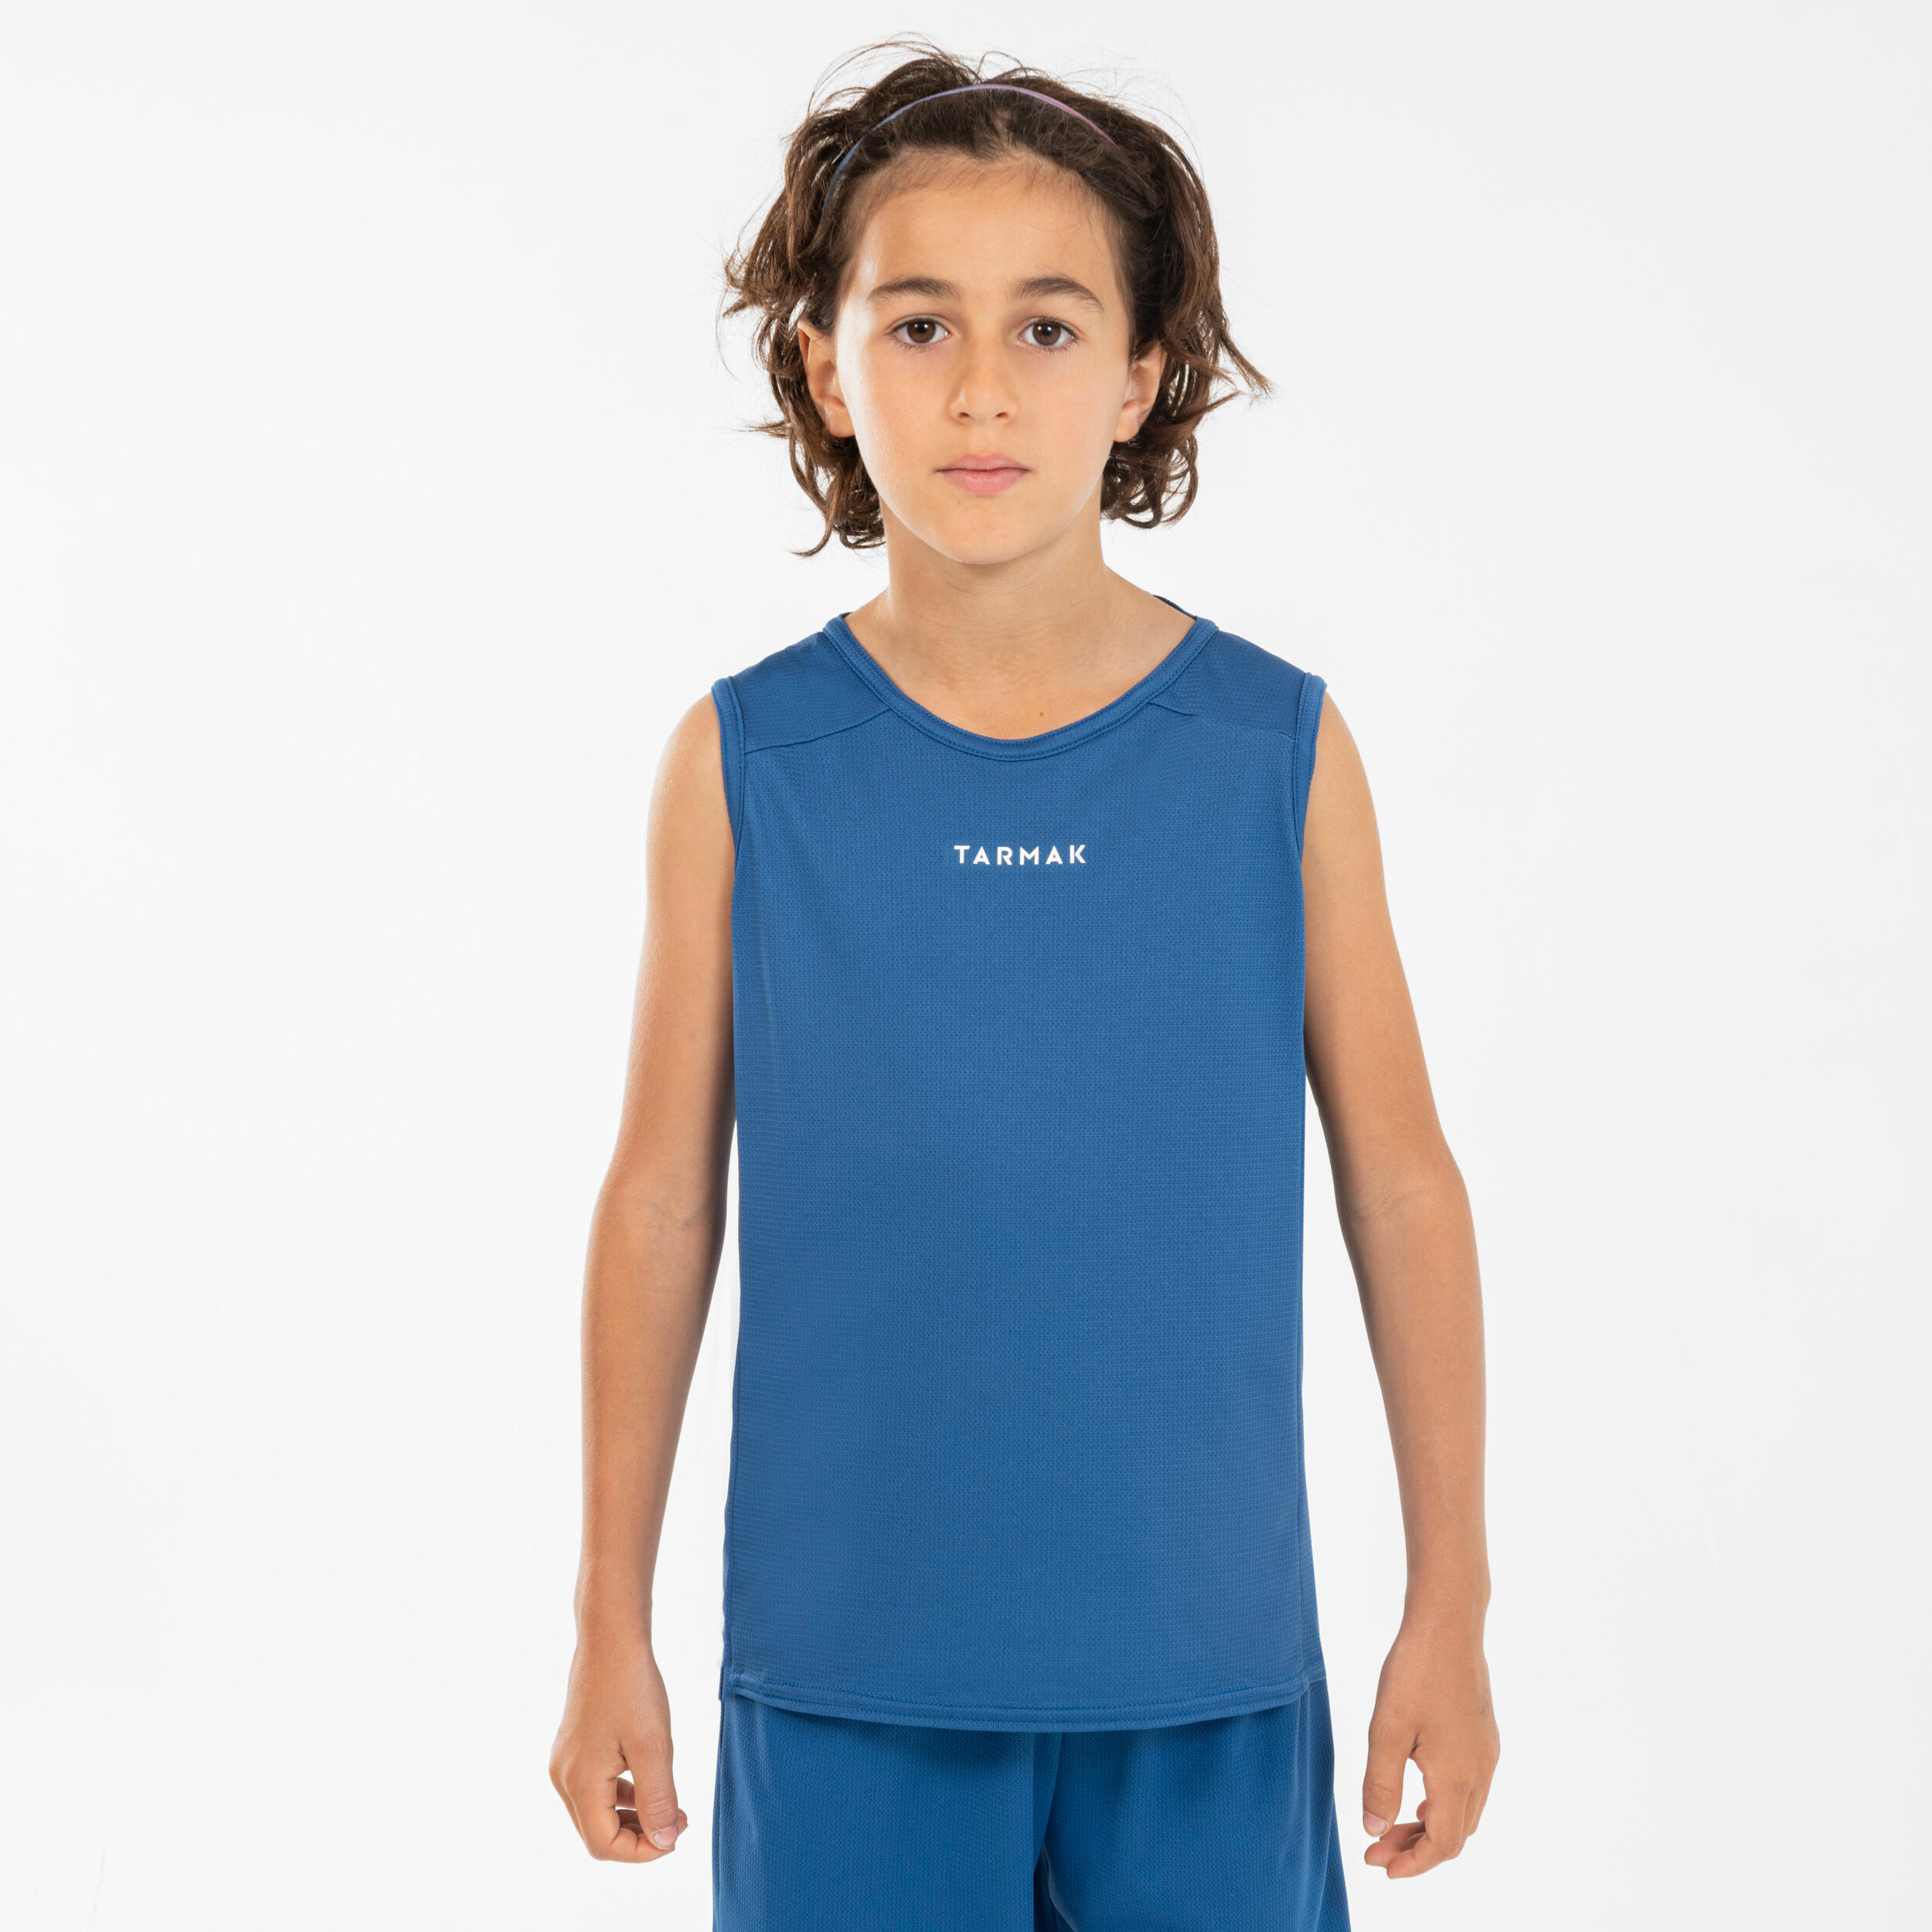 TARMAK Kids' Sleeveless Basketball Jersey T100 - Blue